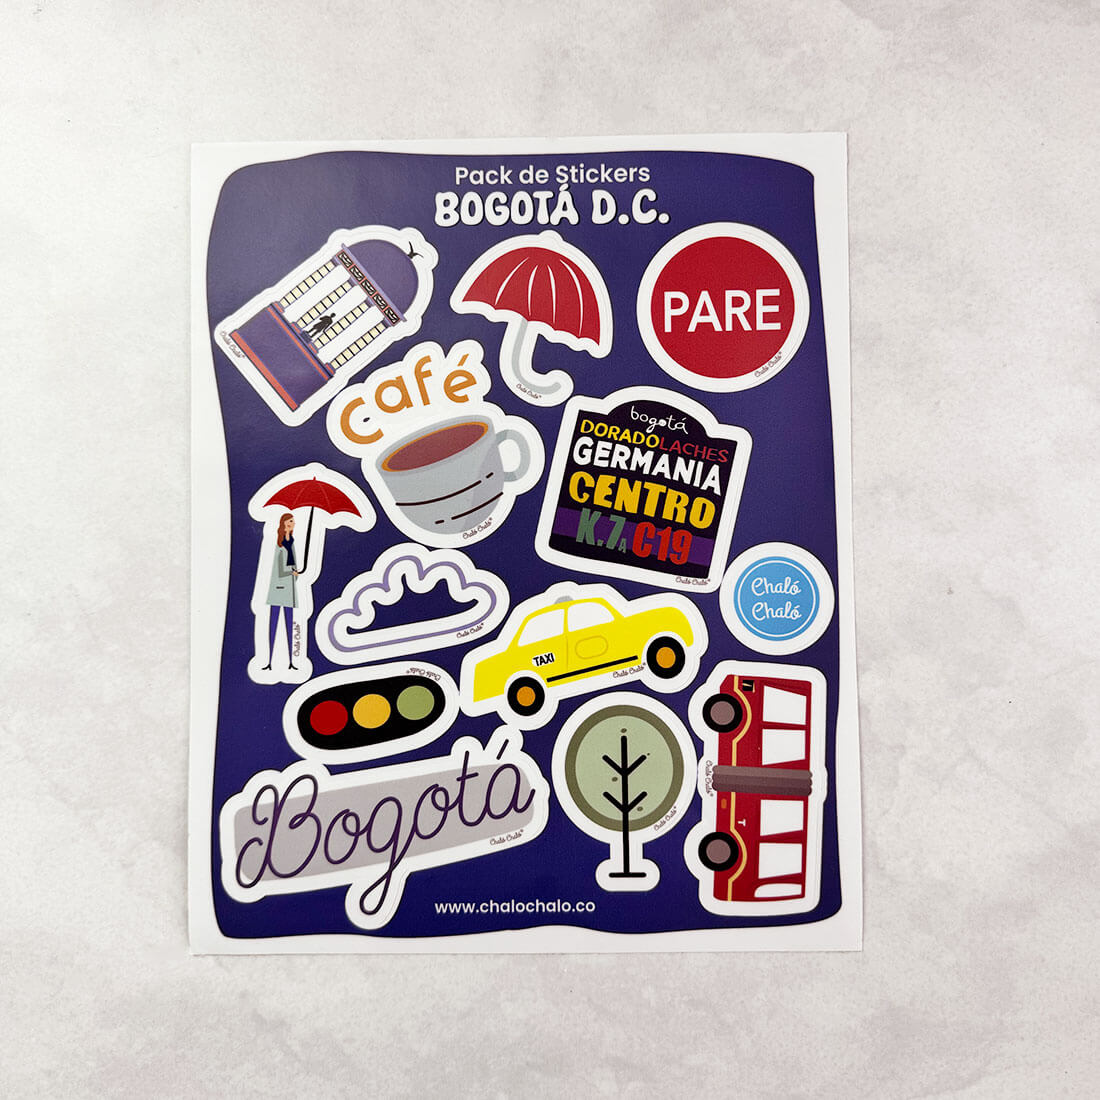 Pack de Stickers - Bogotá